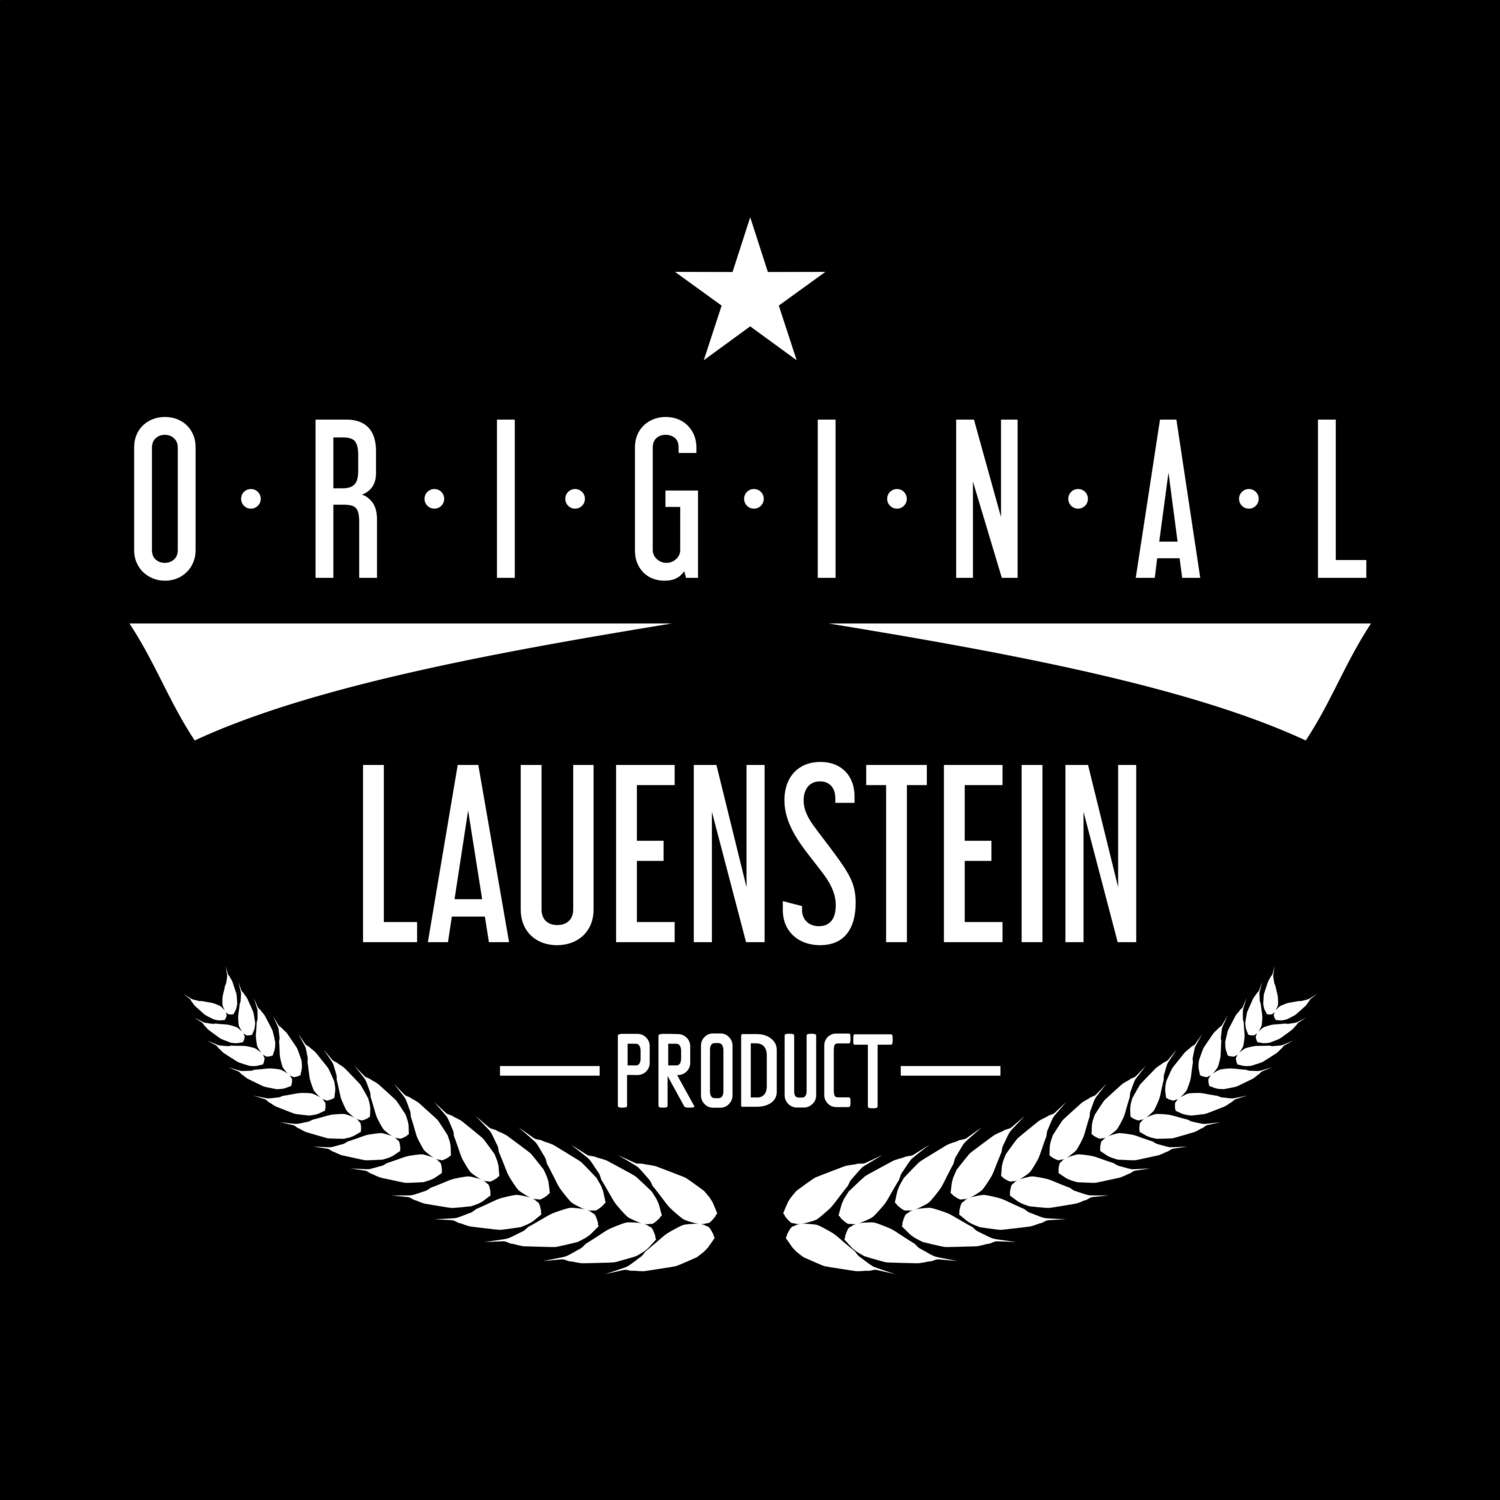 Lauenstein T-Shirt »Original Product«